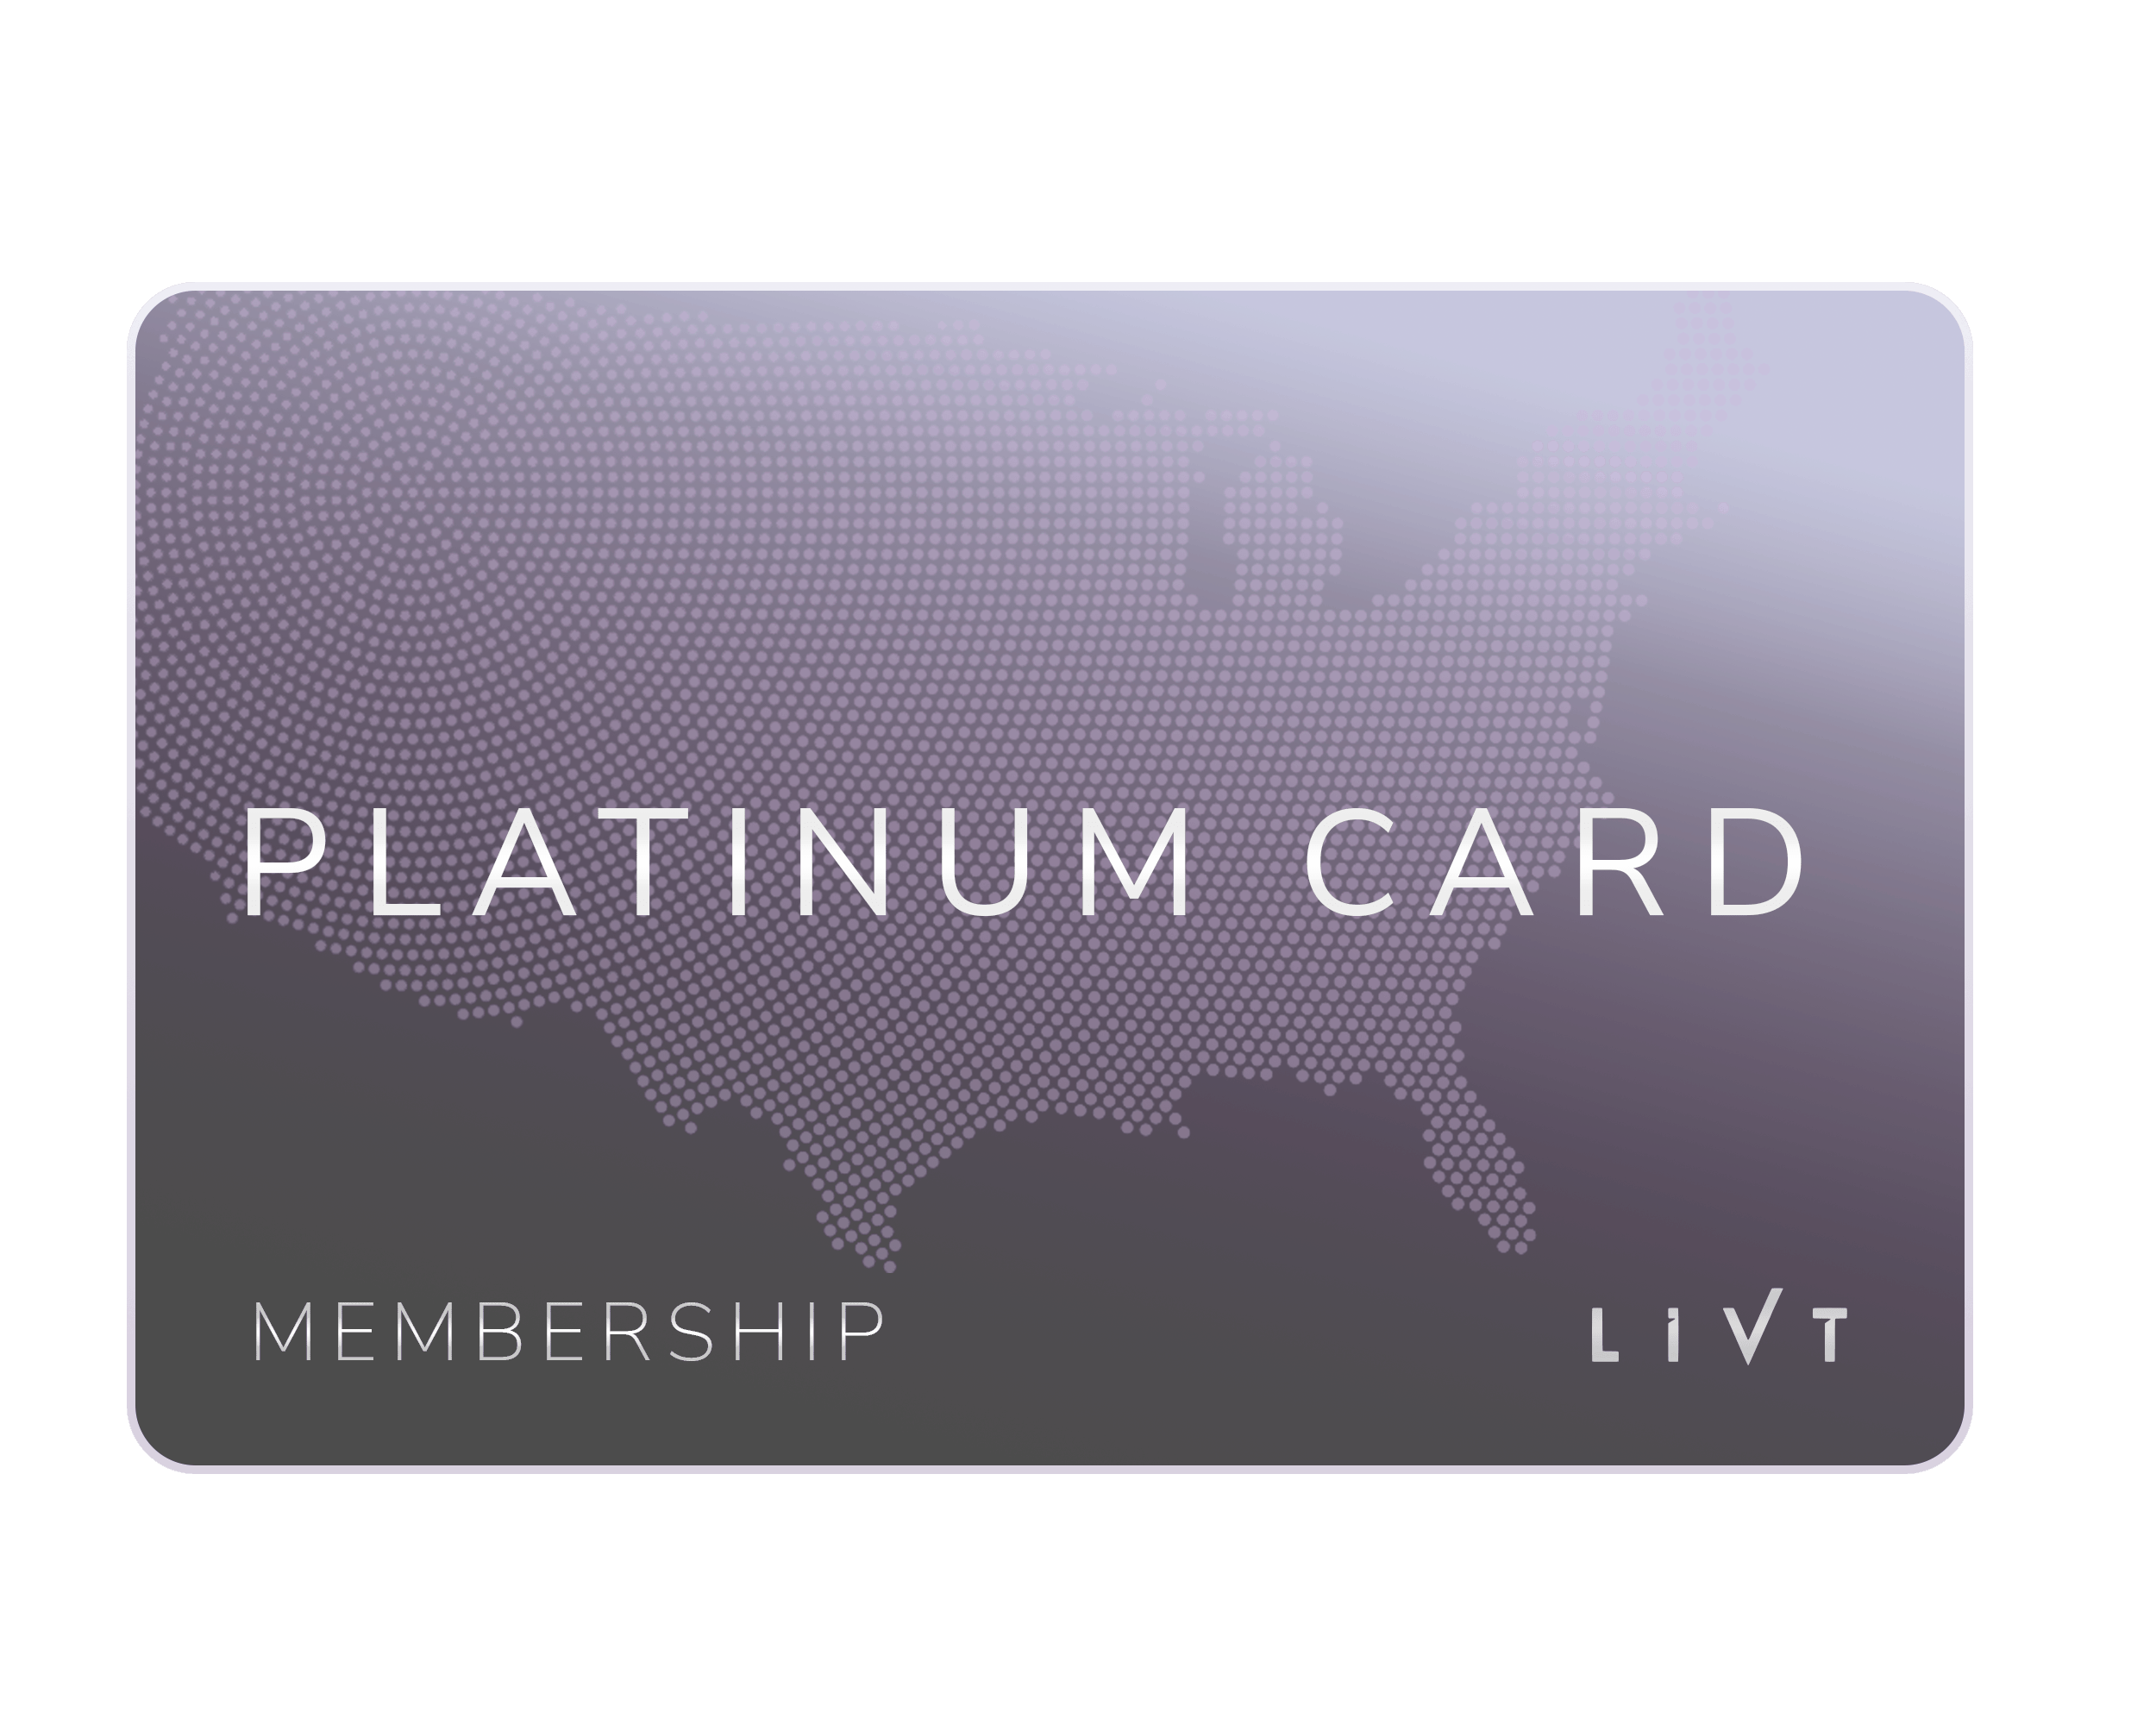 LIVT Platinum Card